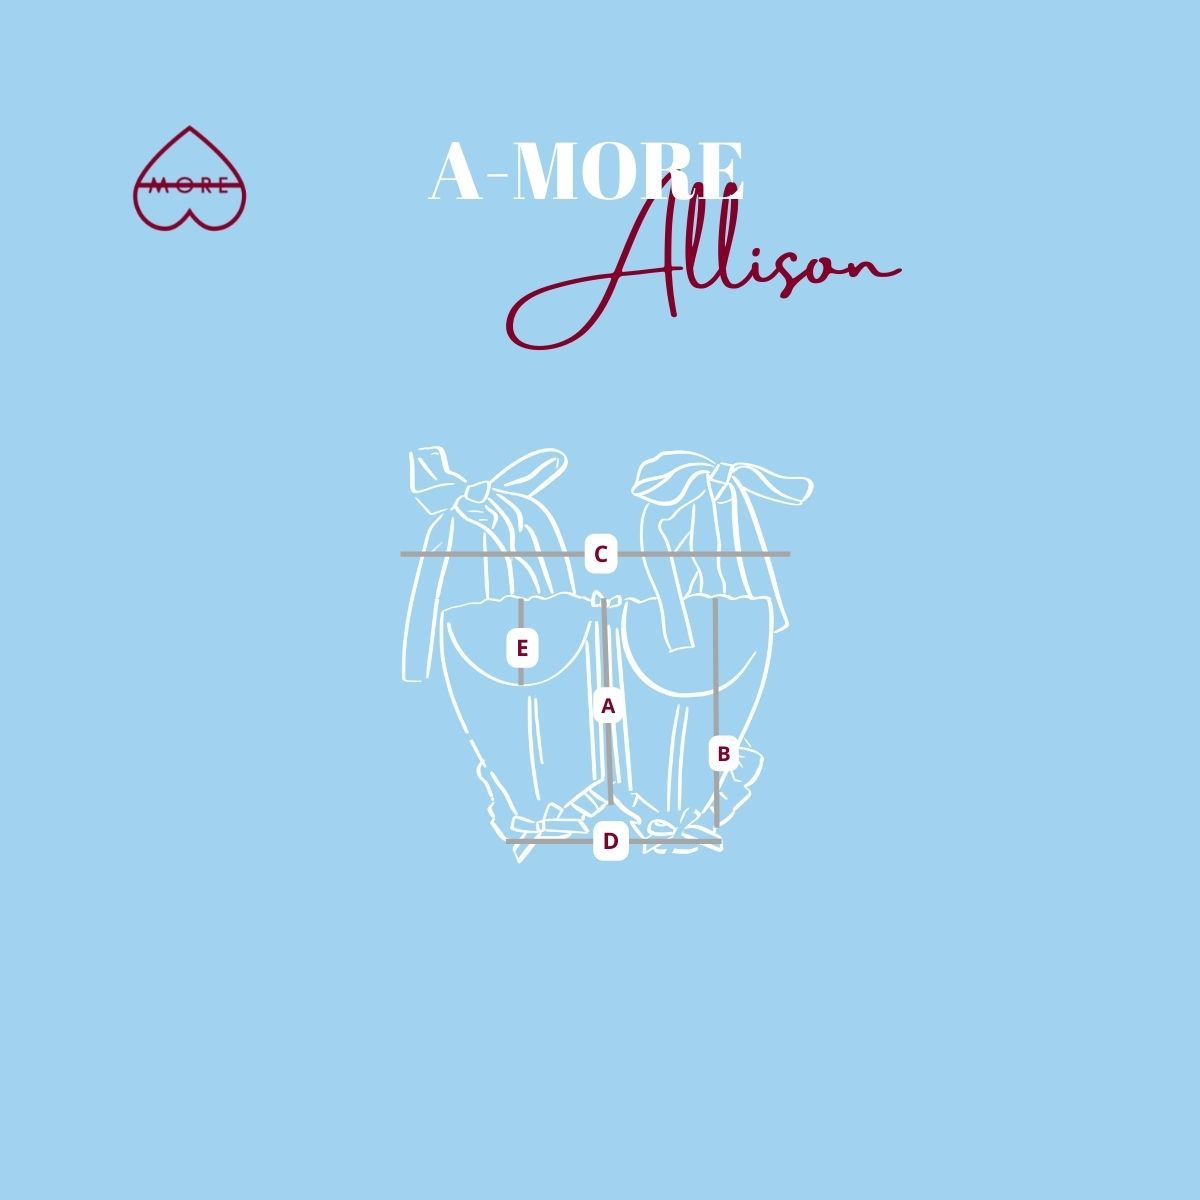 A-MORE Allison - Top